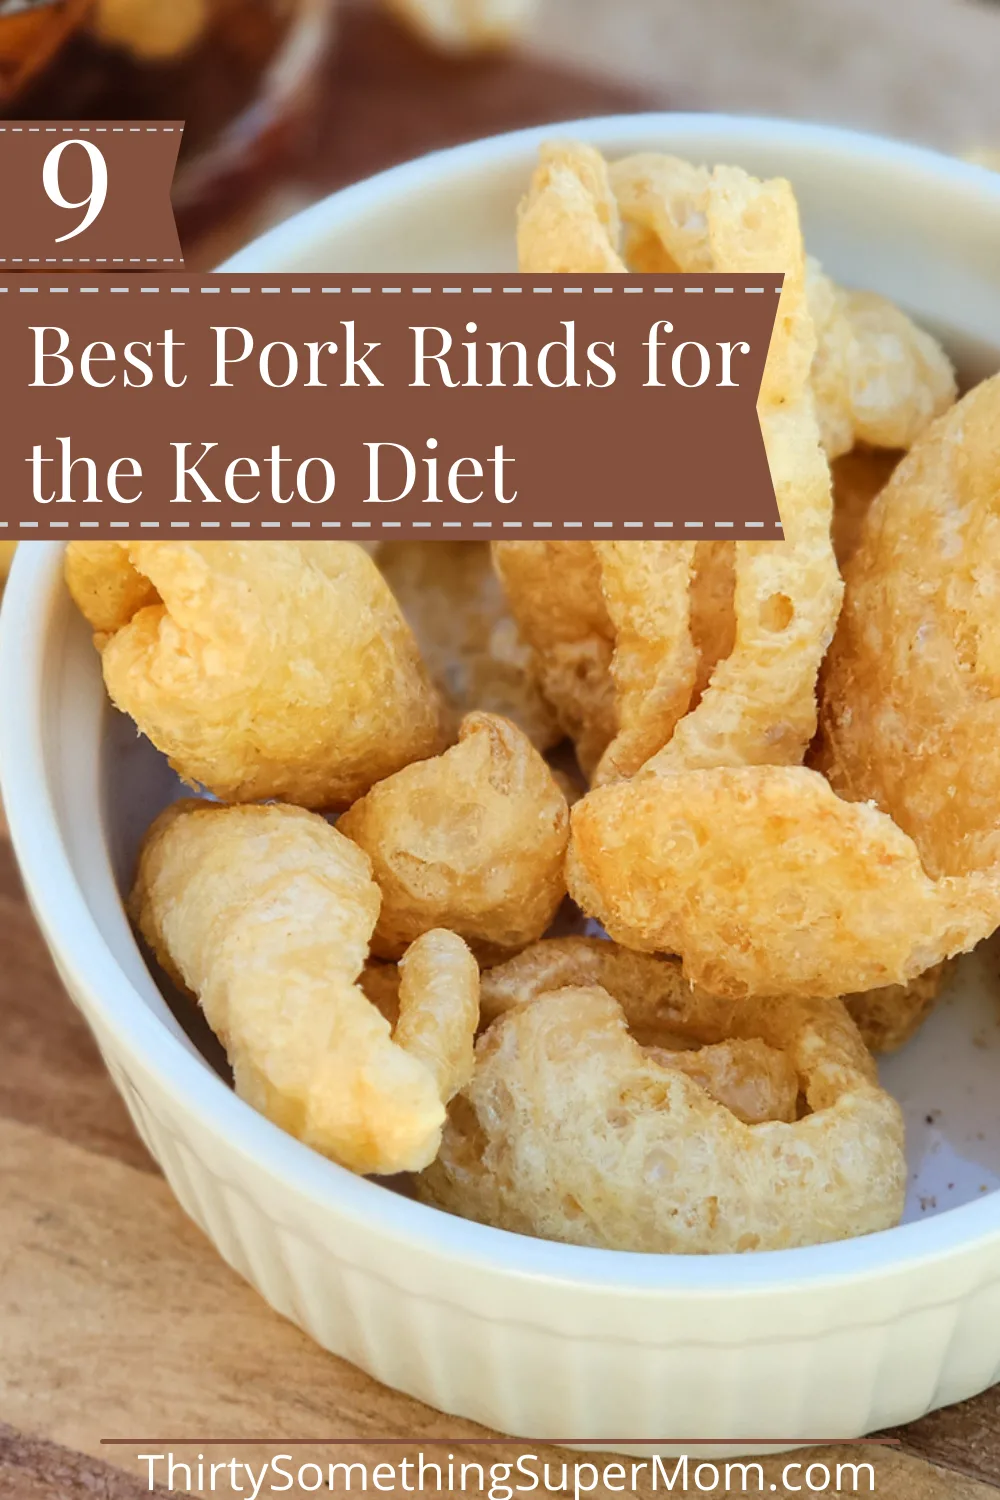 Pork King Good Ranch Pork Rinds (Chicharrones) (4 Pack) Keto Snacks